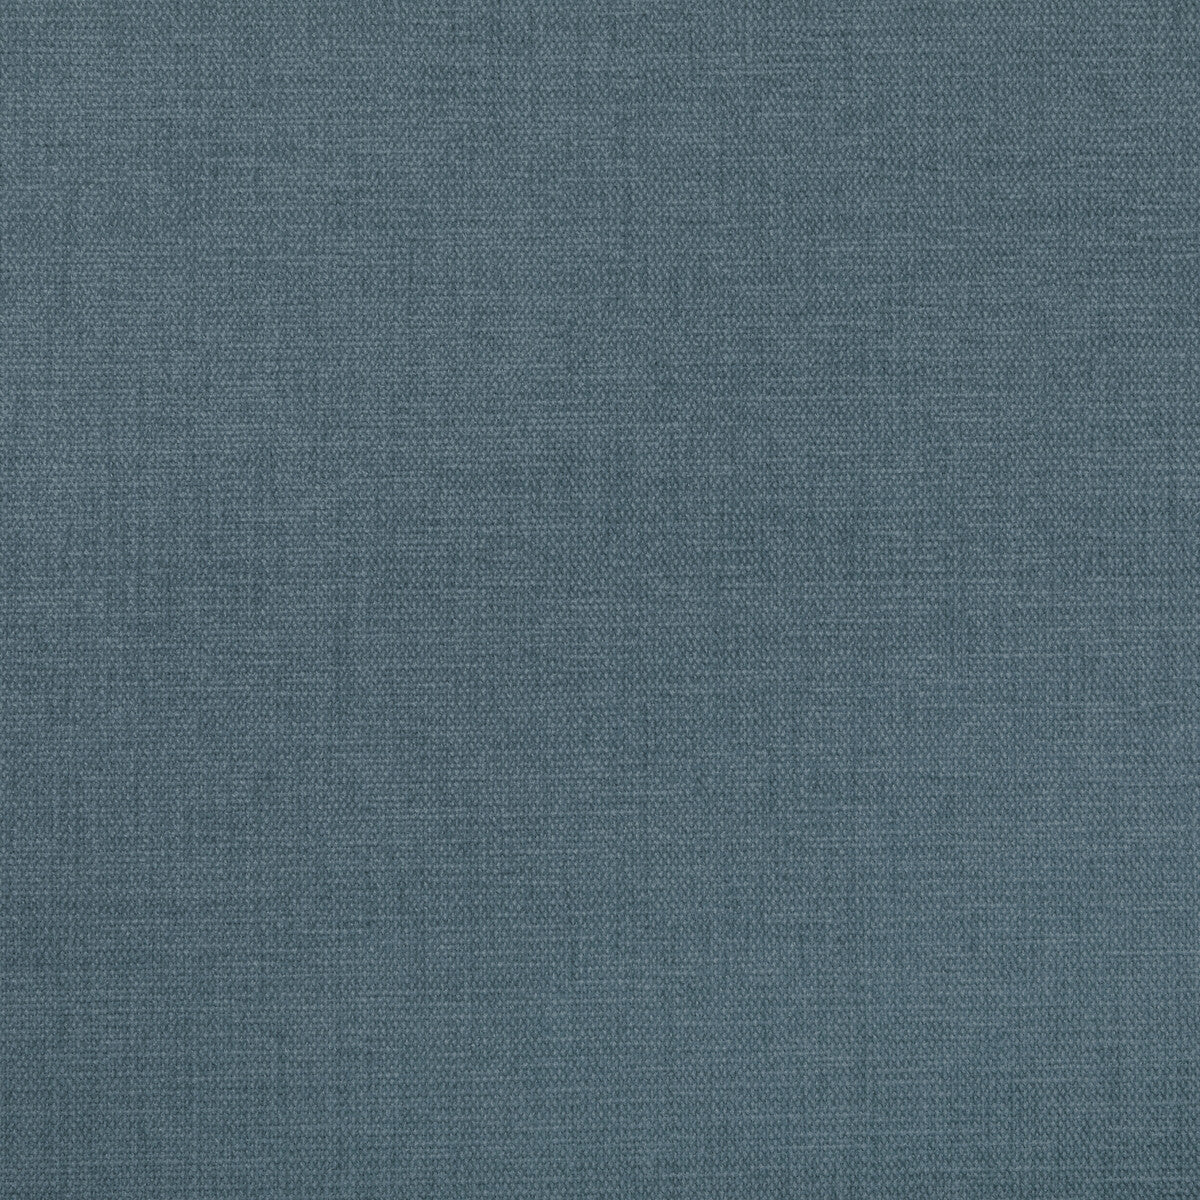 Kravet Smart fabric in 34959-1515 color - pattern 34959.1515.0 - by Kravet Smart in the Performance Kravetarmor collection